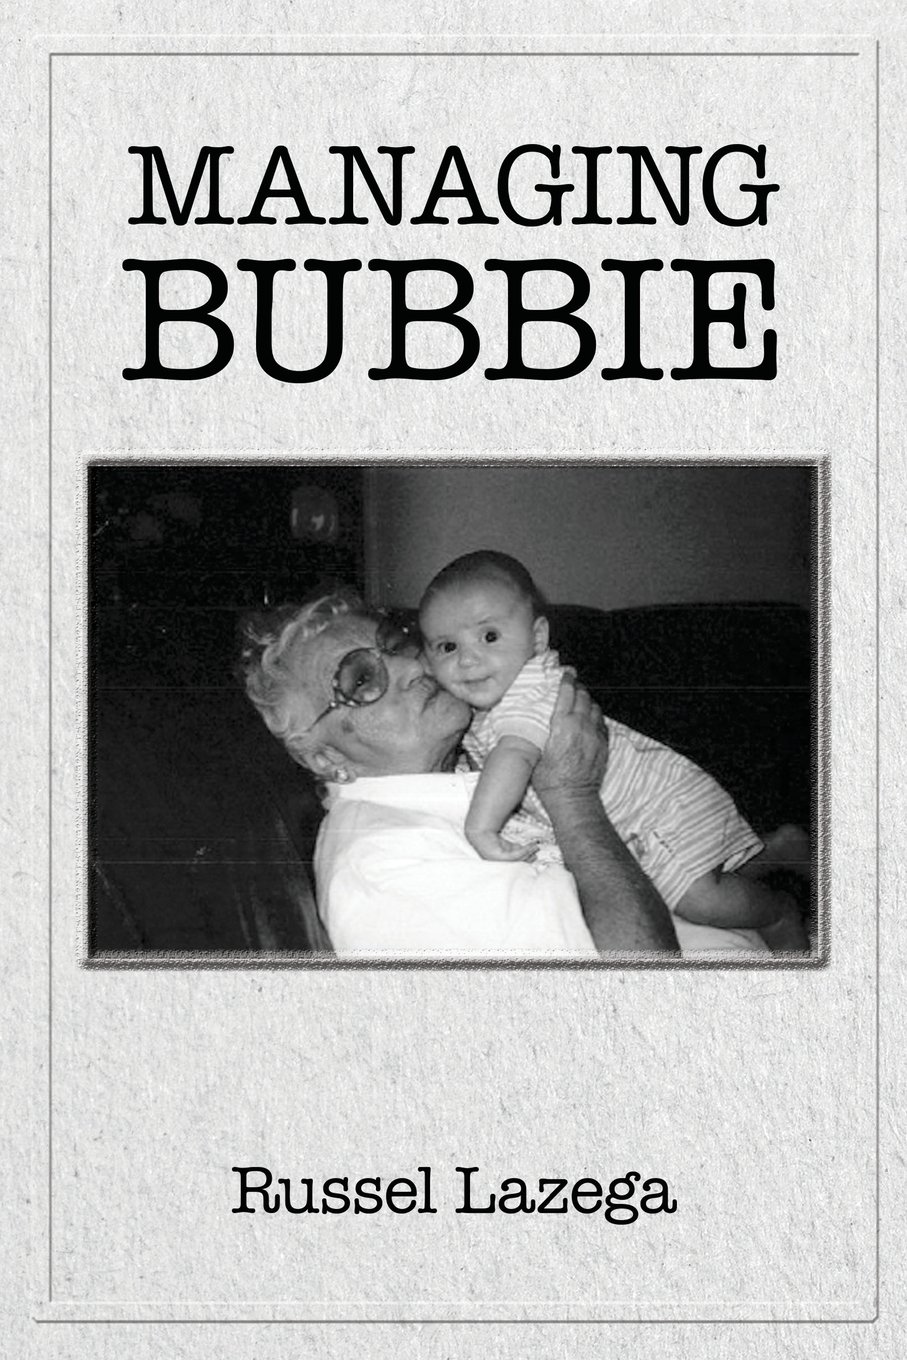 Managing Bubbie by Russel Lazega